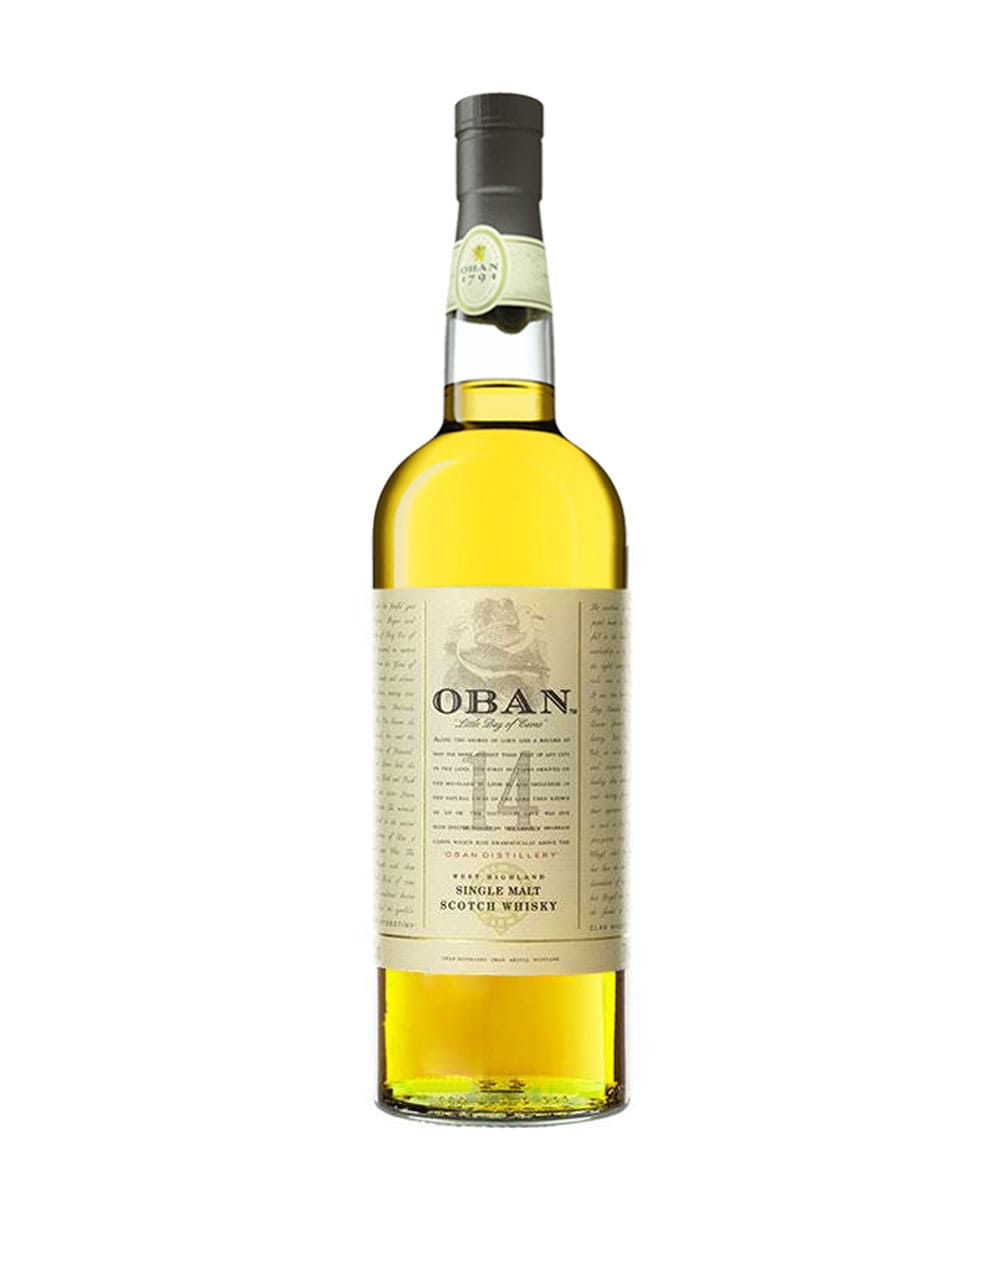 Oban 14 Year Old Scotch whisky